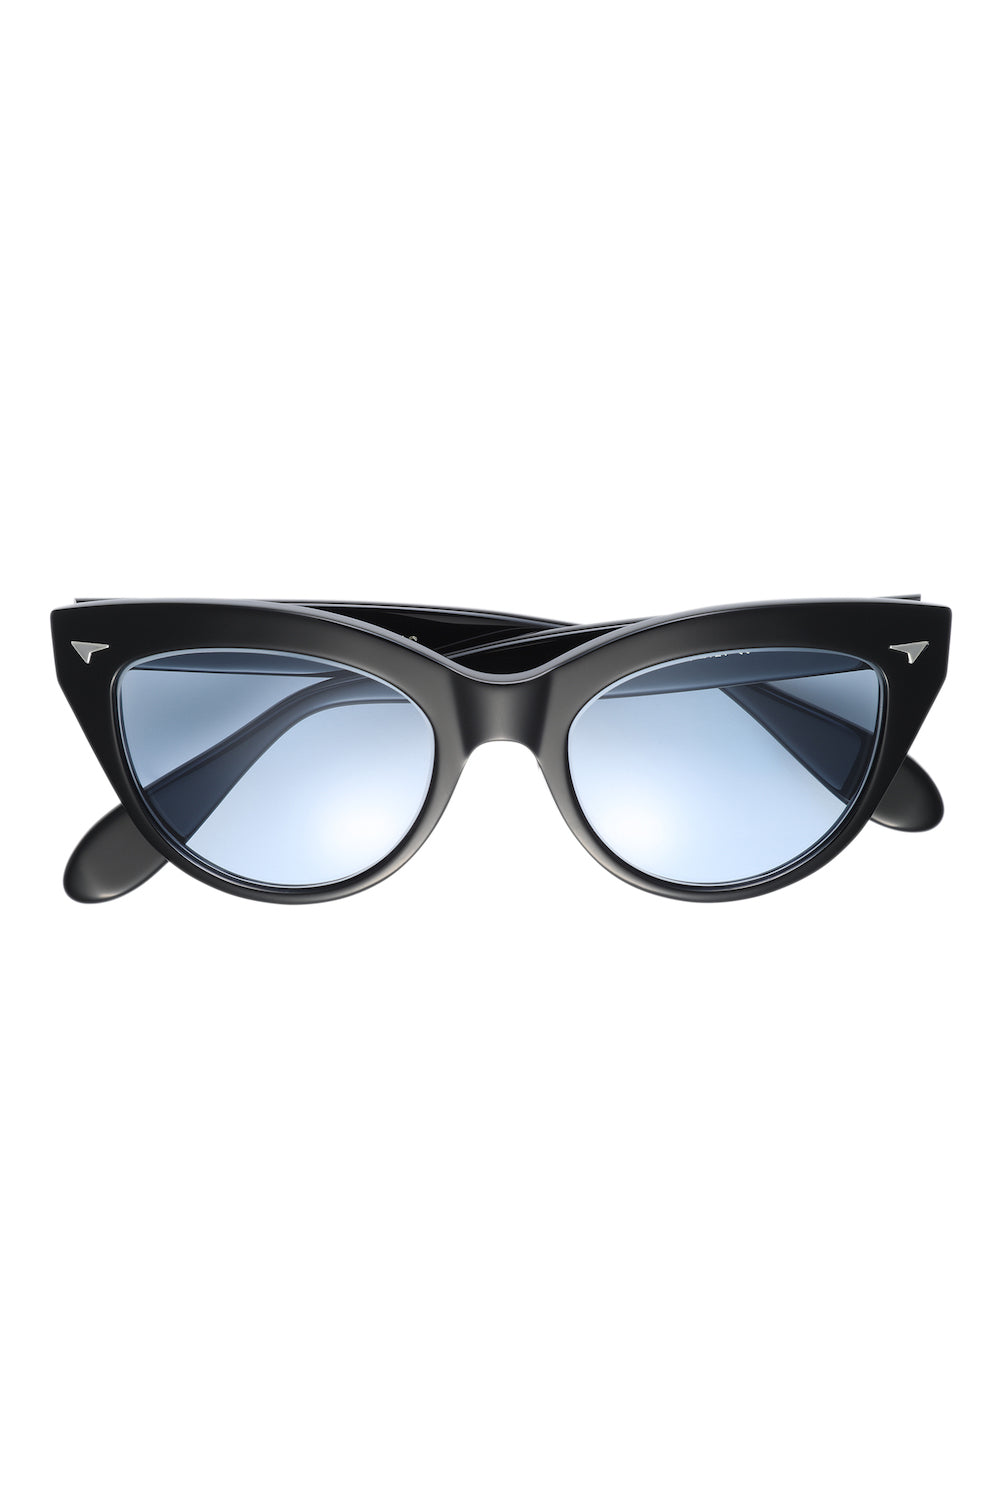 AE0004 Eyewear ”Hep Cat” -Black Frame-